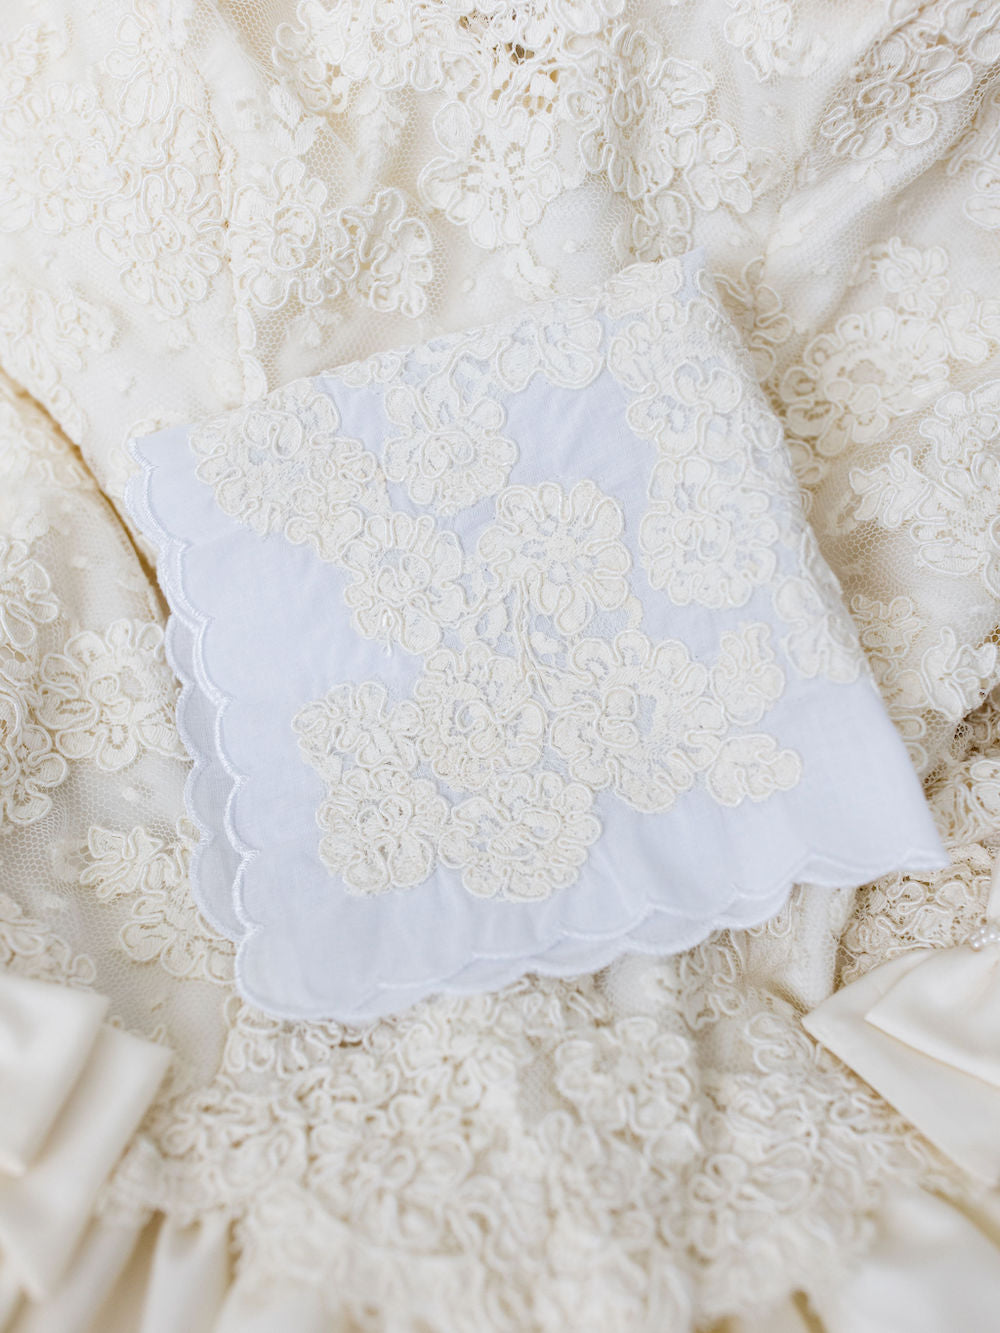 handmade ivory handkerchief wedding heirloom custom-made by The Garter Girl